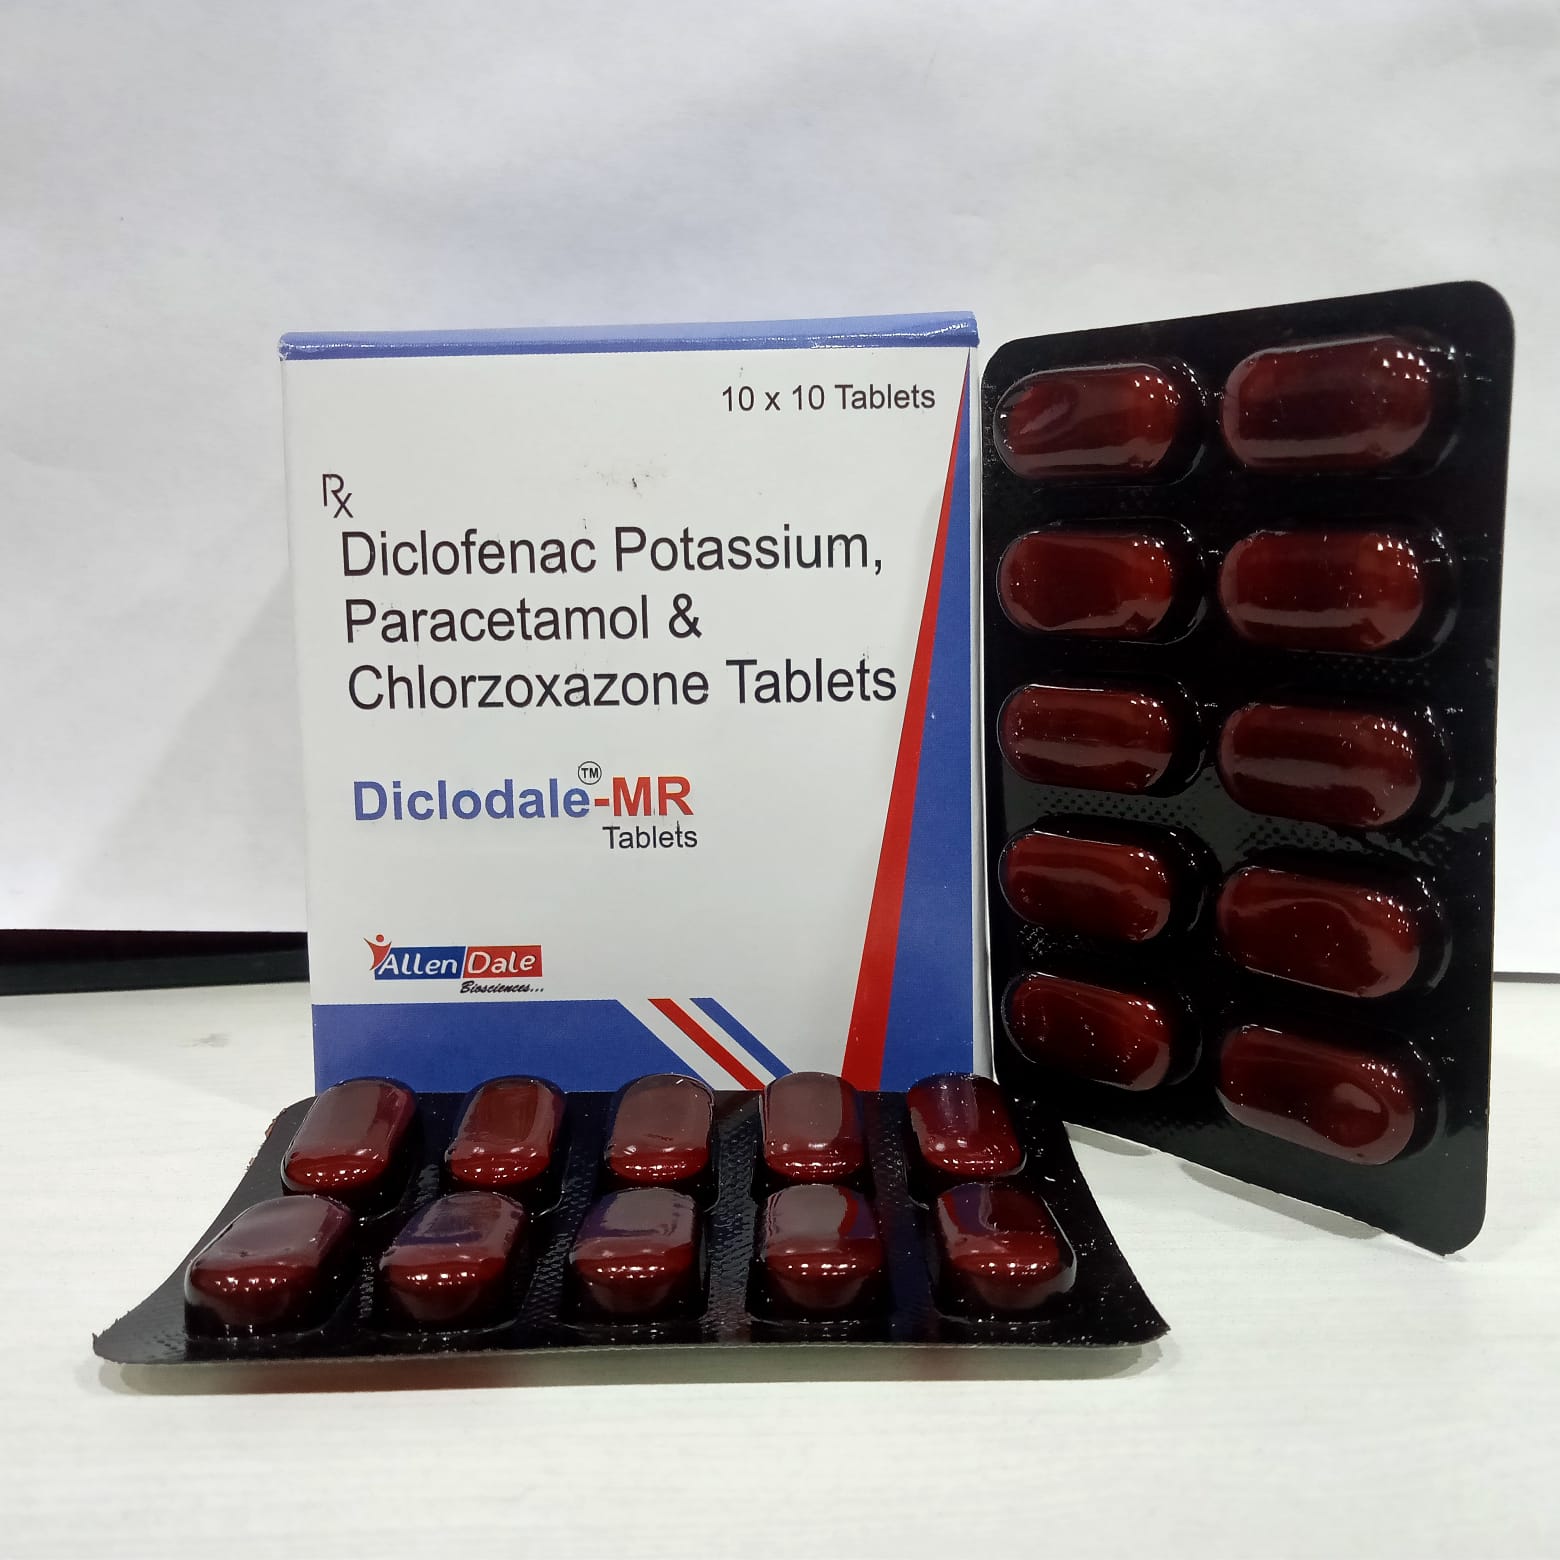 DICLODALE-MR Tablets